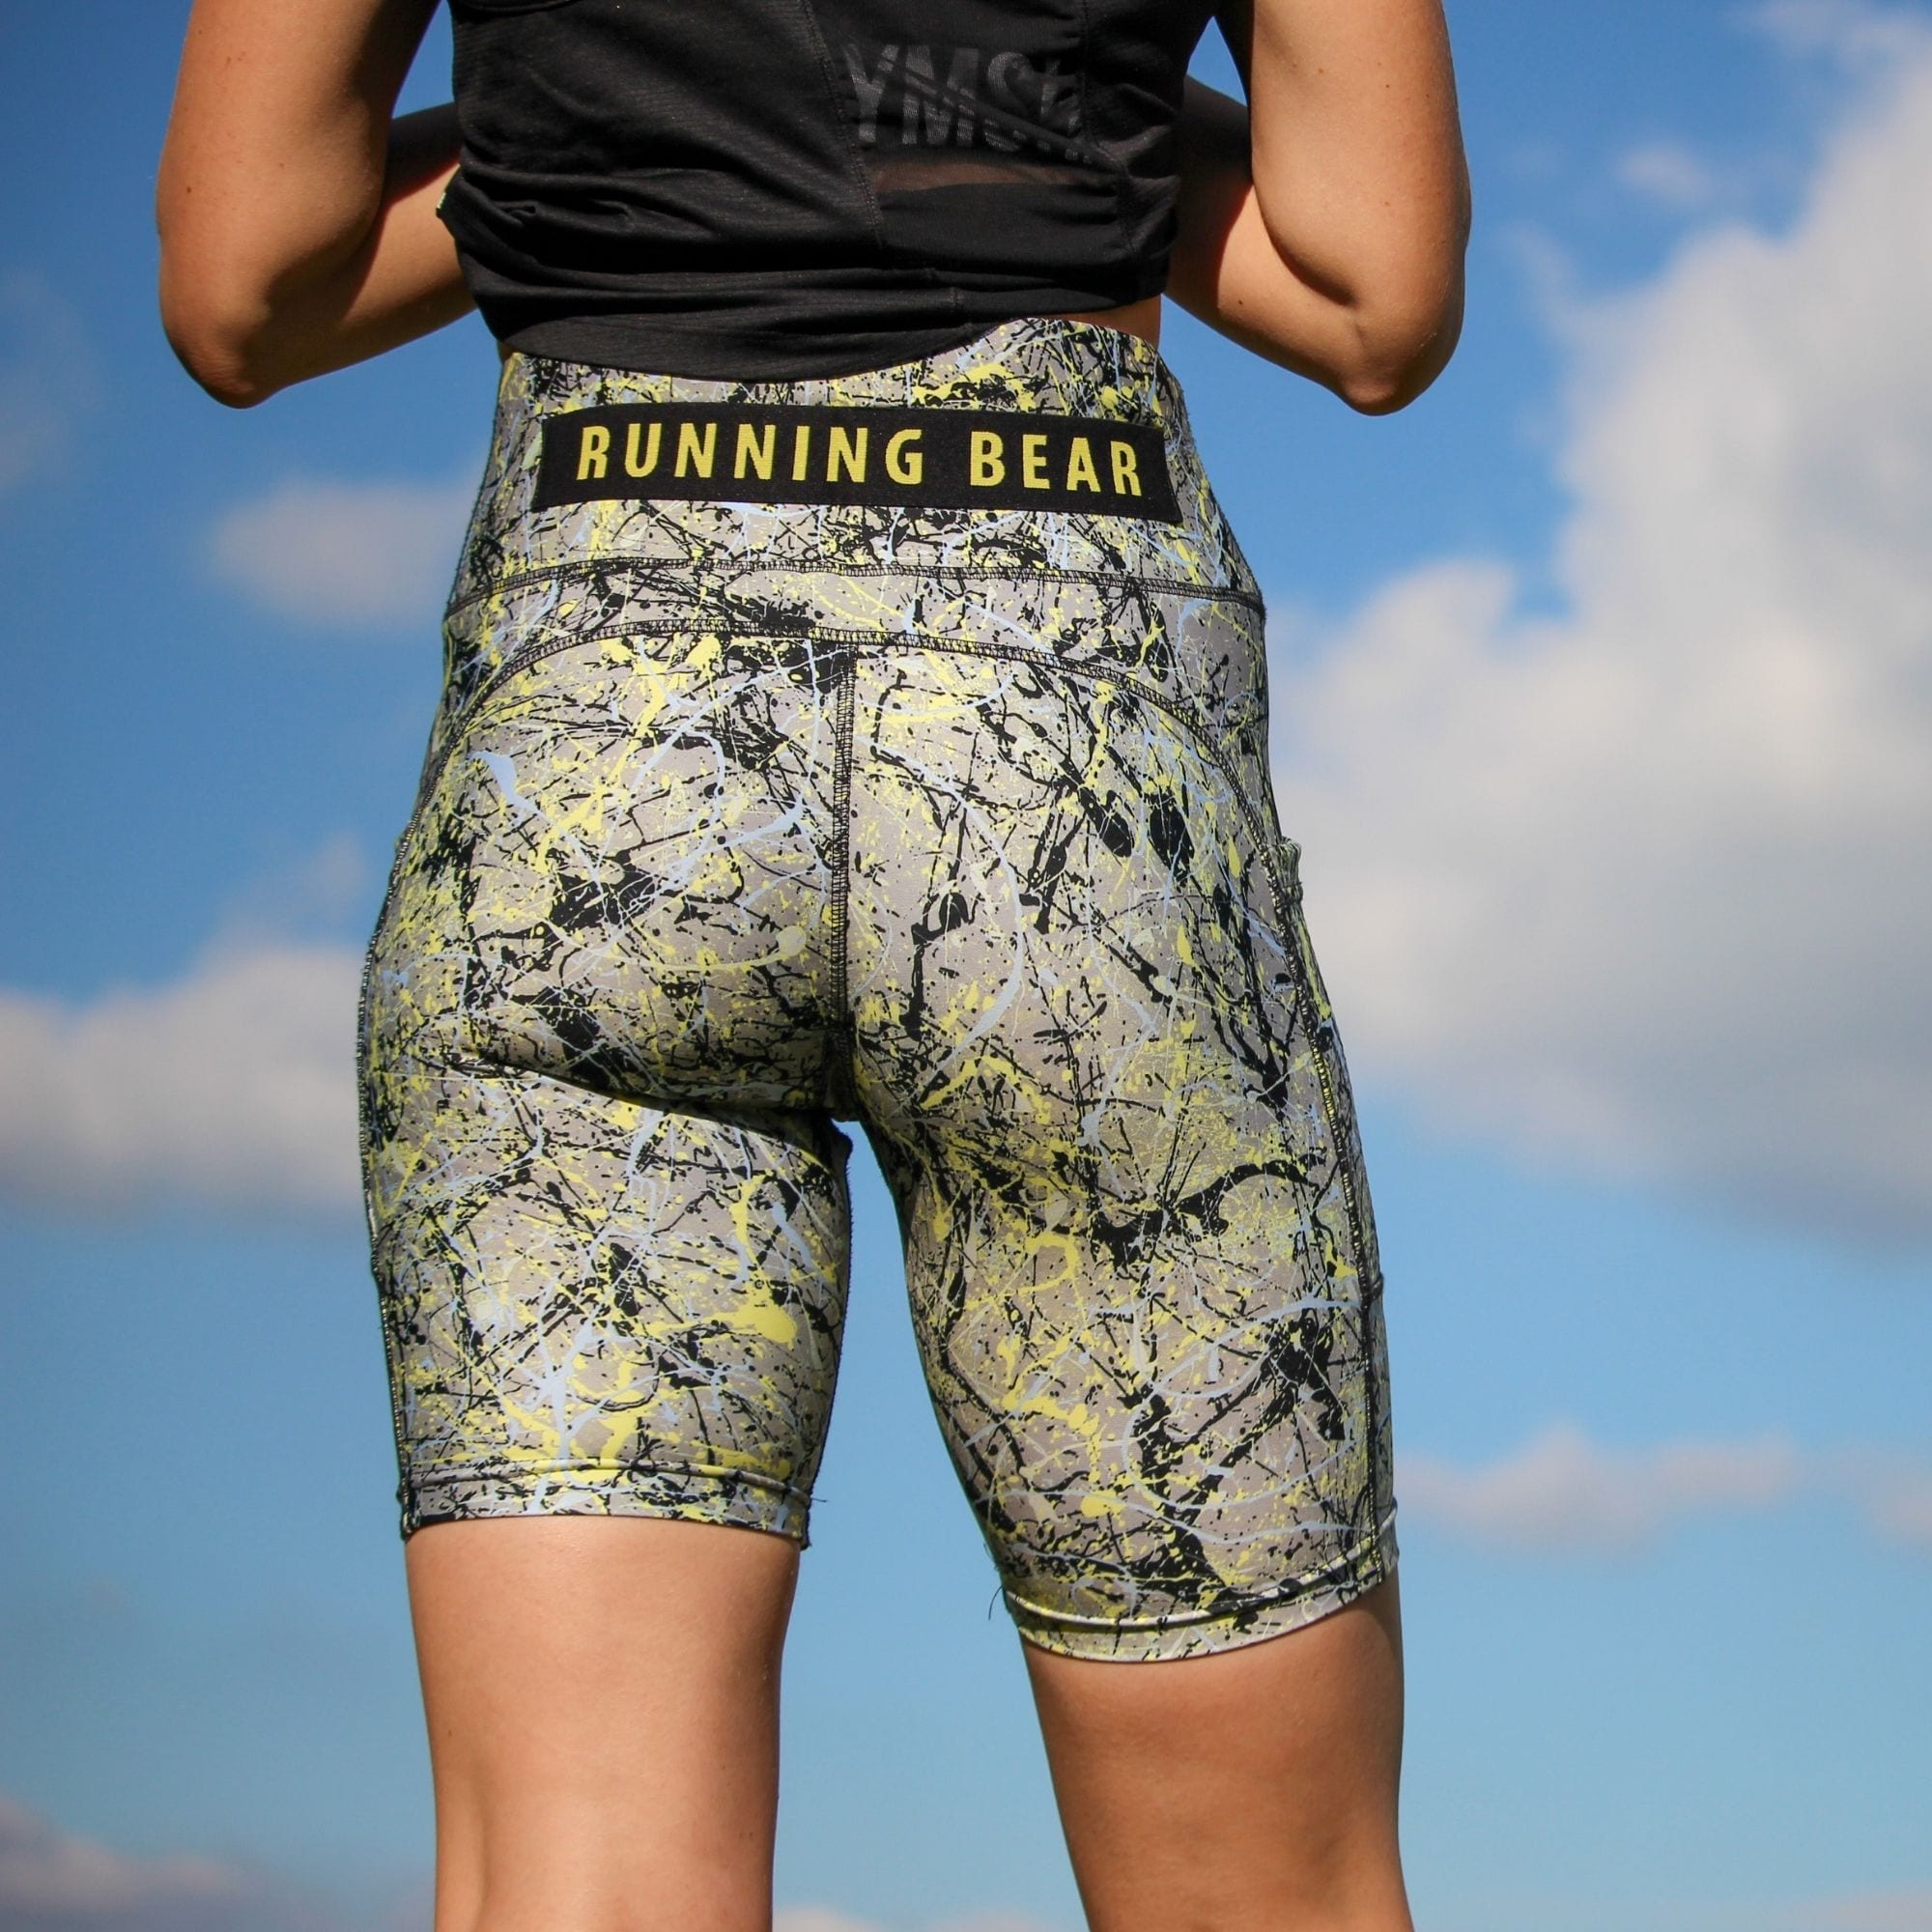 Running Bear Best Running Shorts Soft Fabric UK